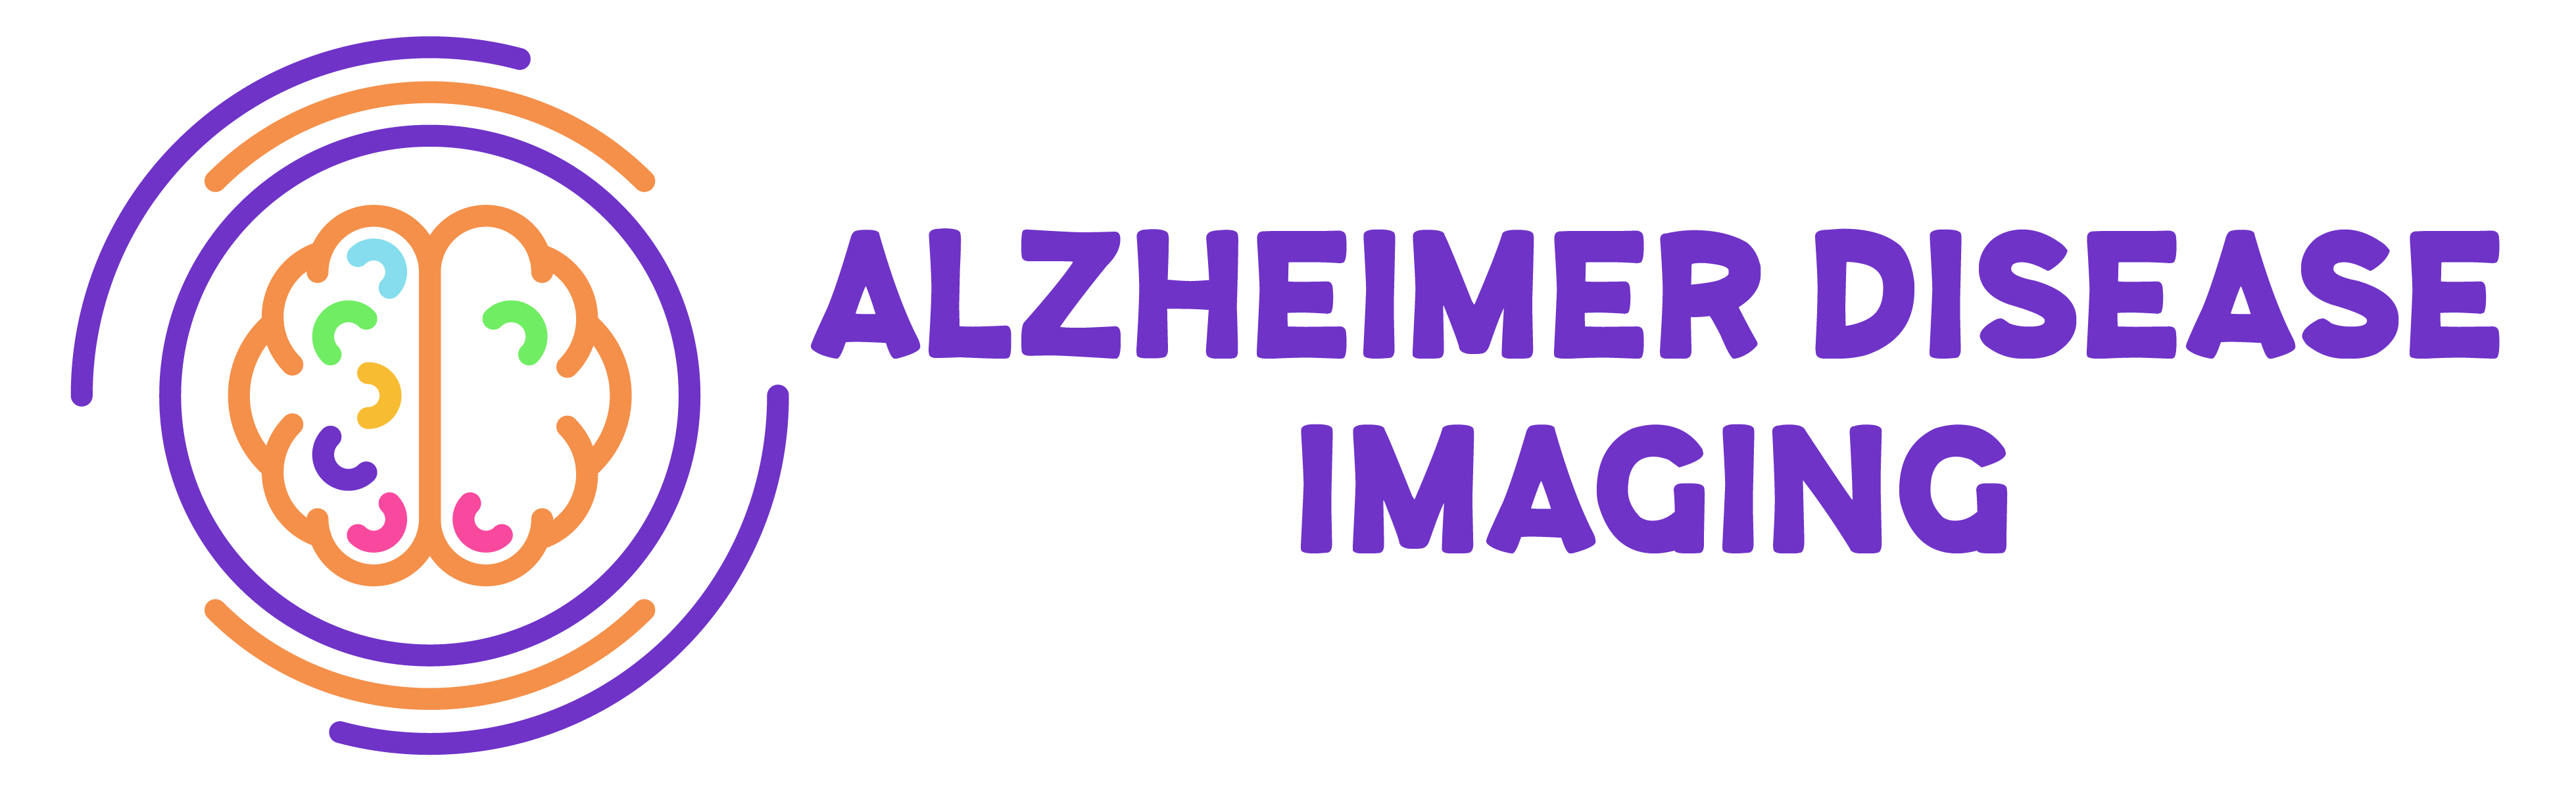 Alzheimer Disease Imaging Florida